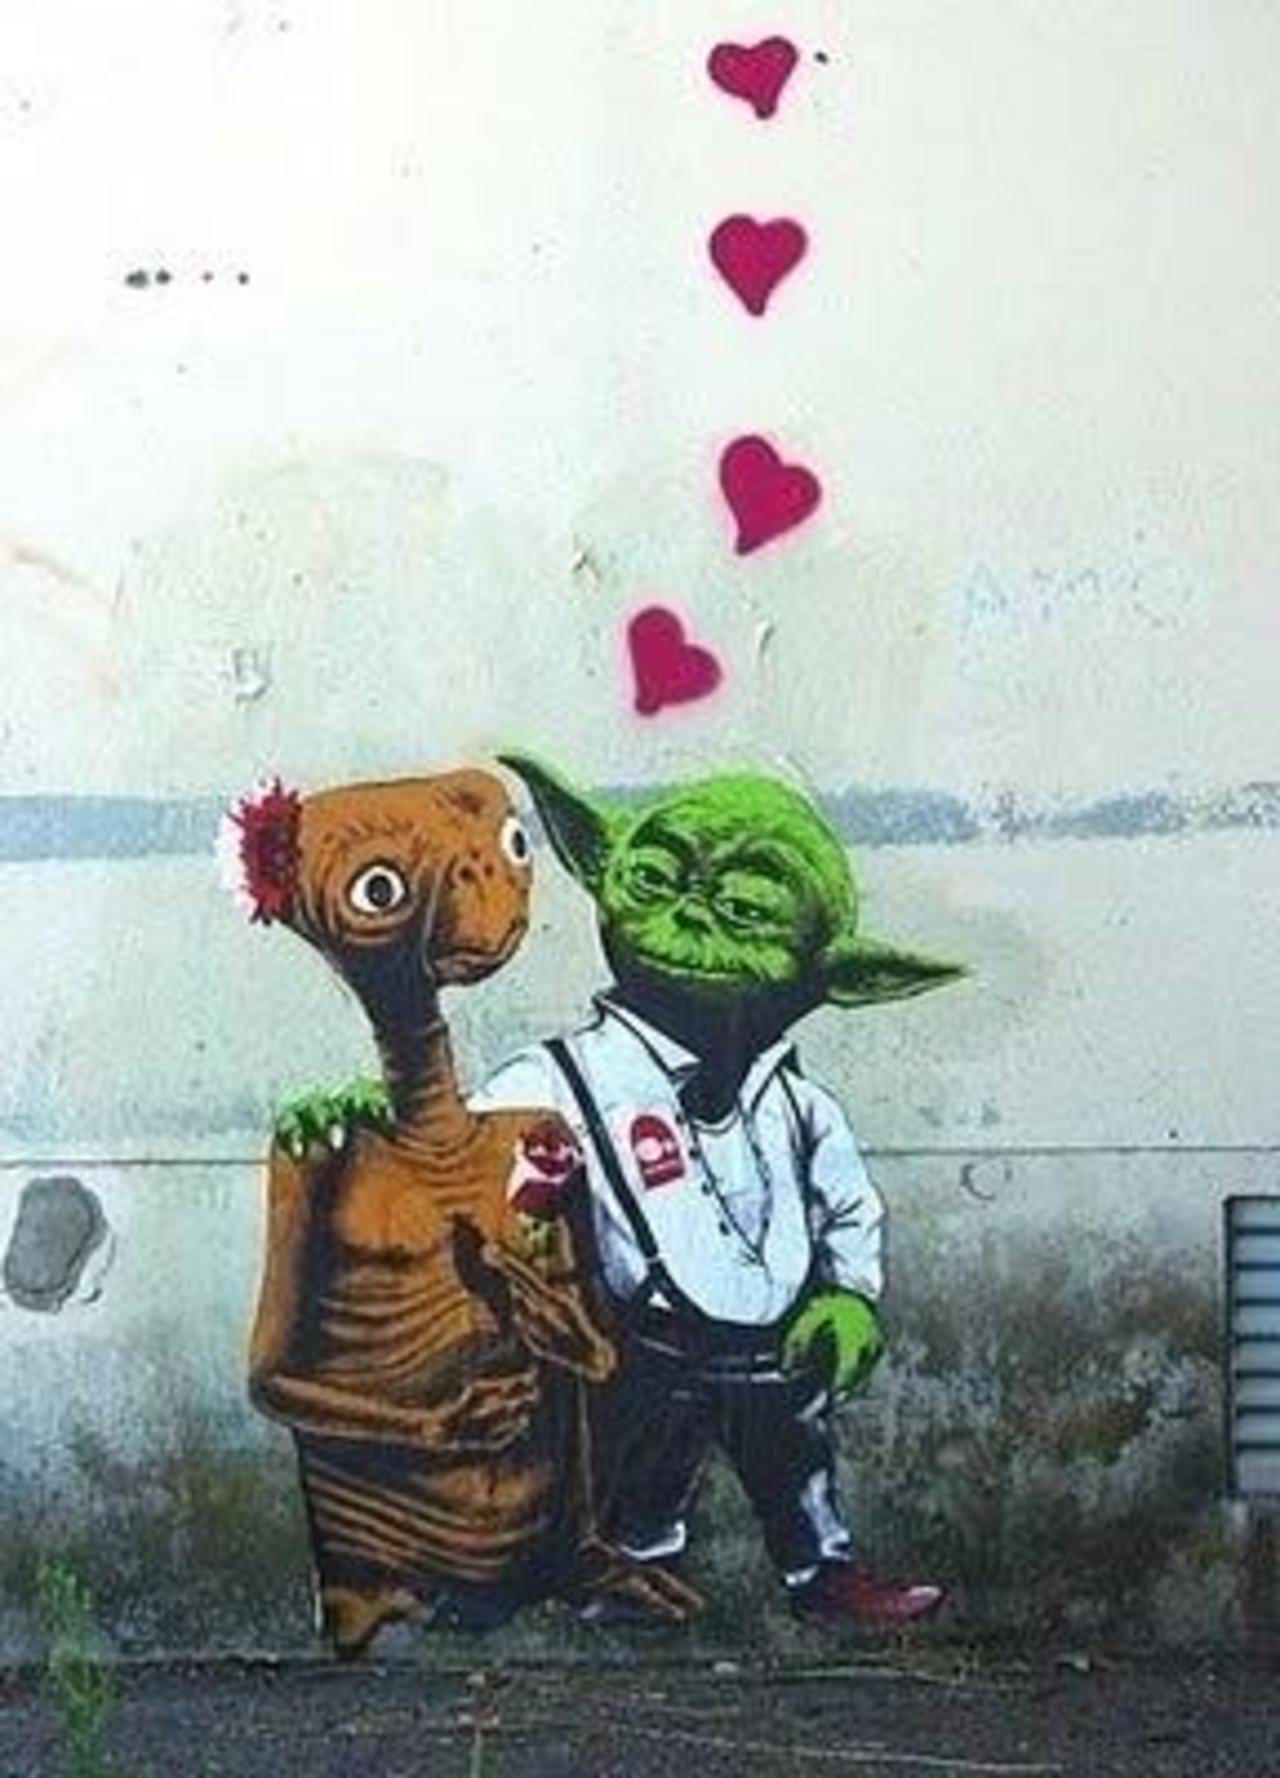 "@5putnik1: Extra Terrestrial Romance #graffiti #streetart #art #dope . : http://t.co/GnpKnuJJYx" ☆ ☆ ☆